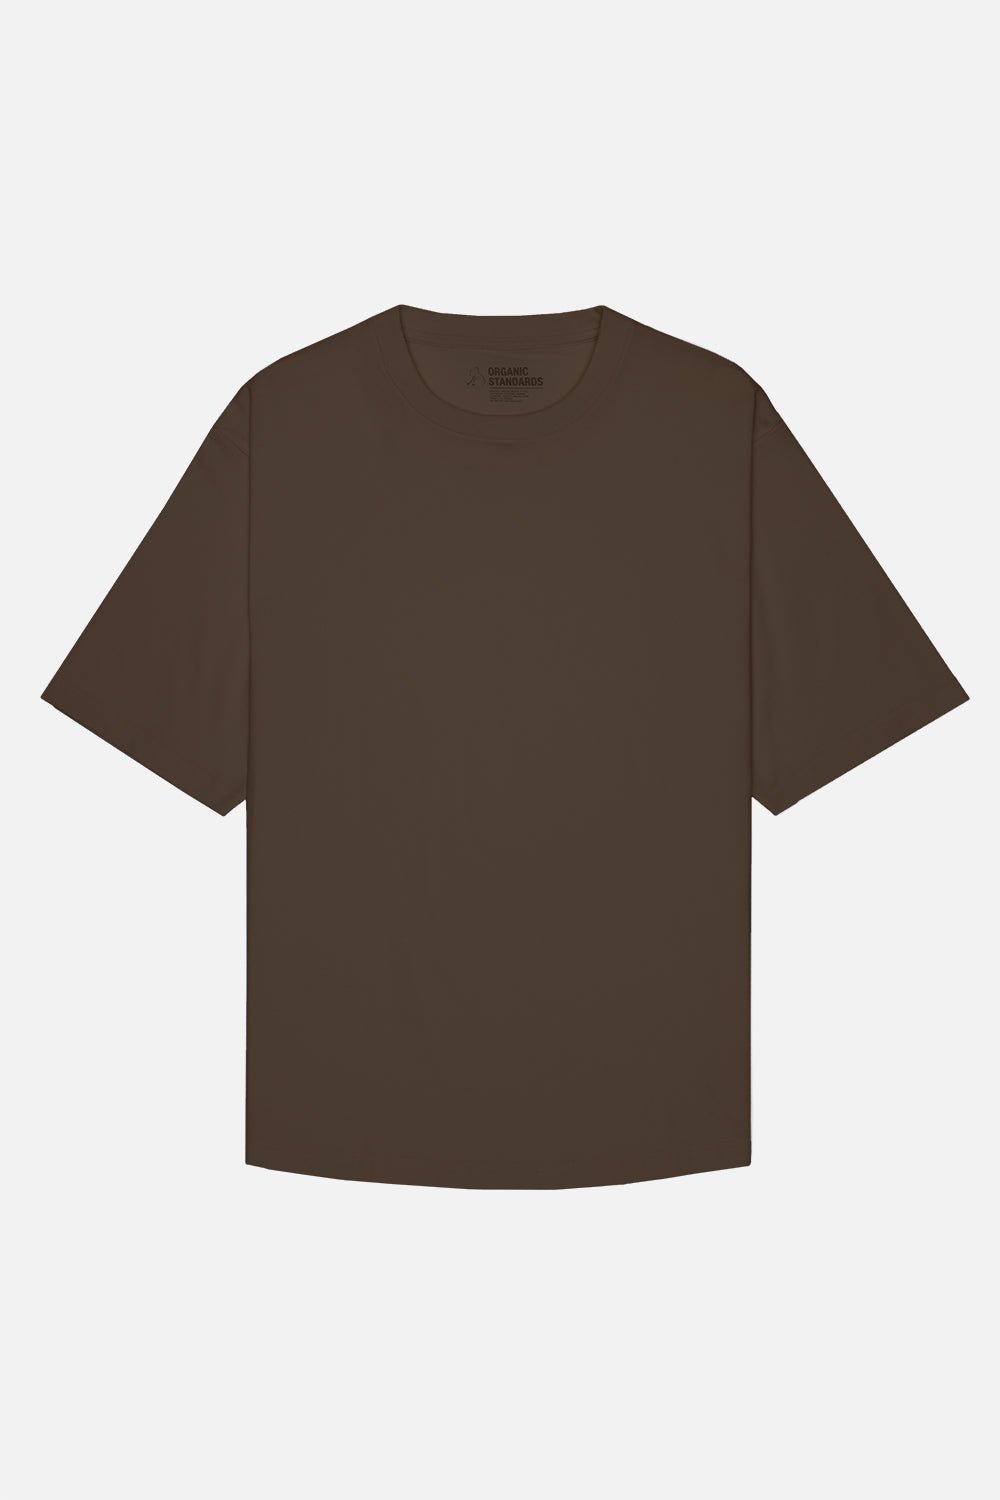 Kuwalla Tee Crew V-Neck Men's T-Shirt 3-Pack – NYCMode